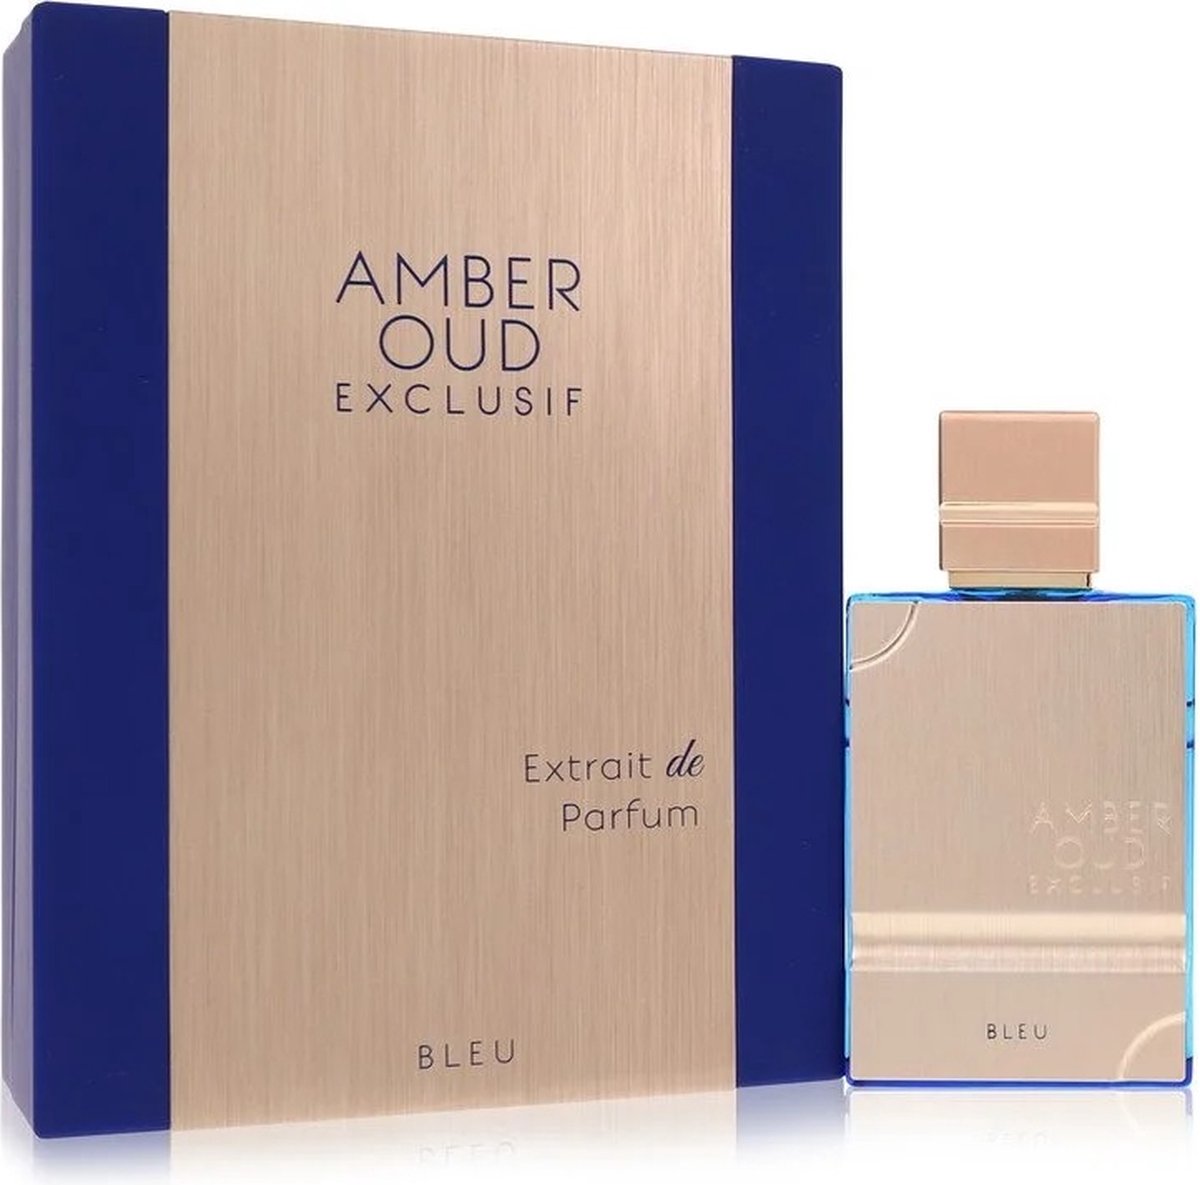 Al Haramain Amber Oud Exclusif Bleu - Extrait de Parfum spray - 60 ml